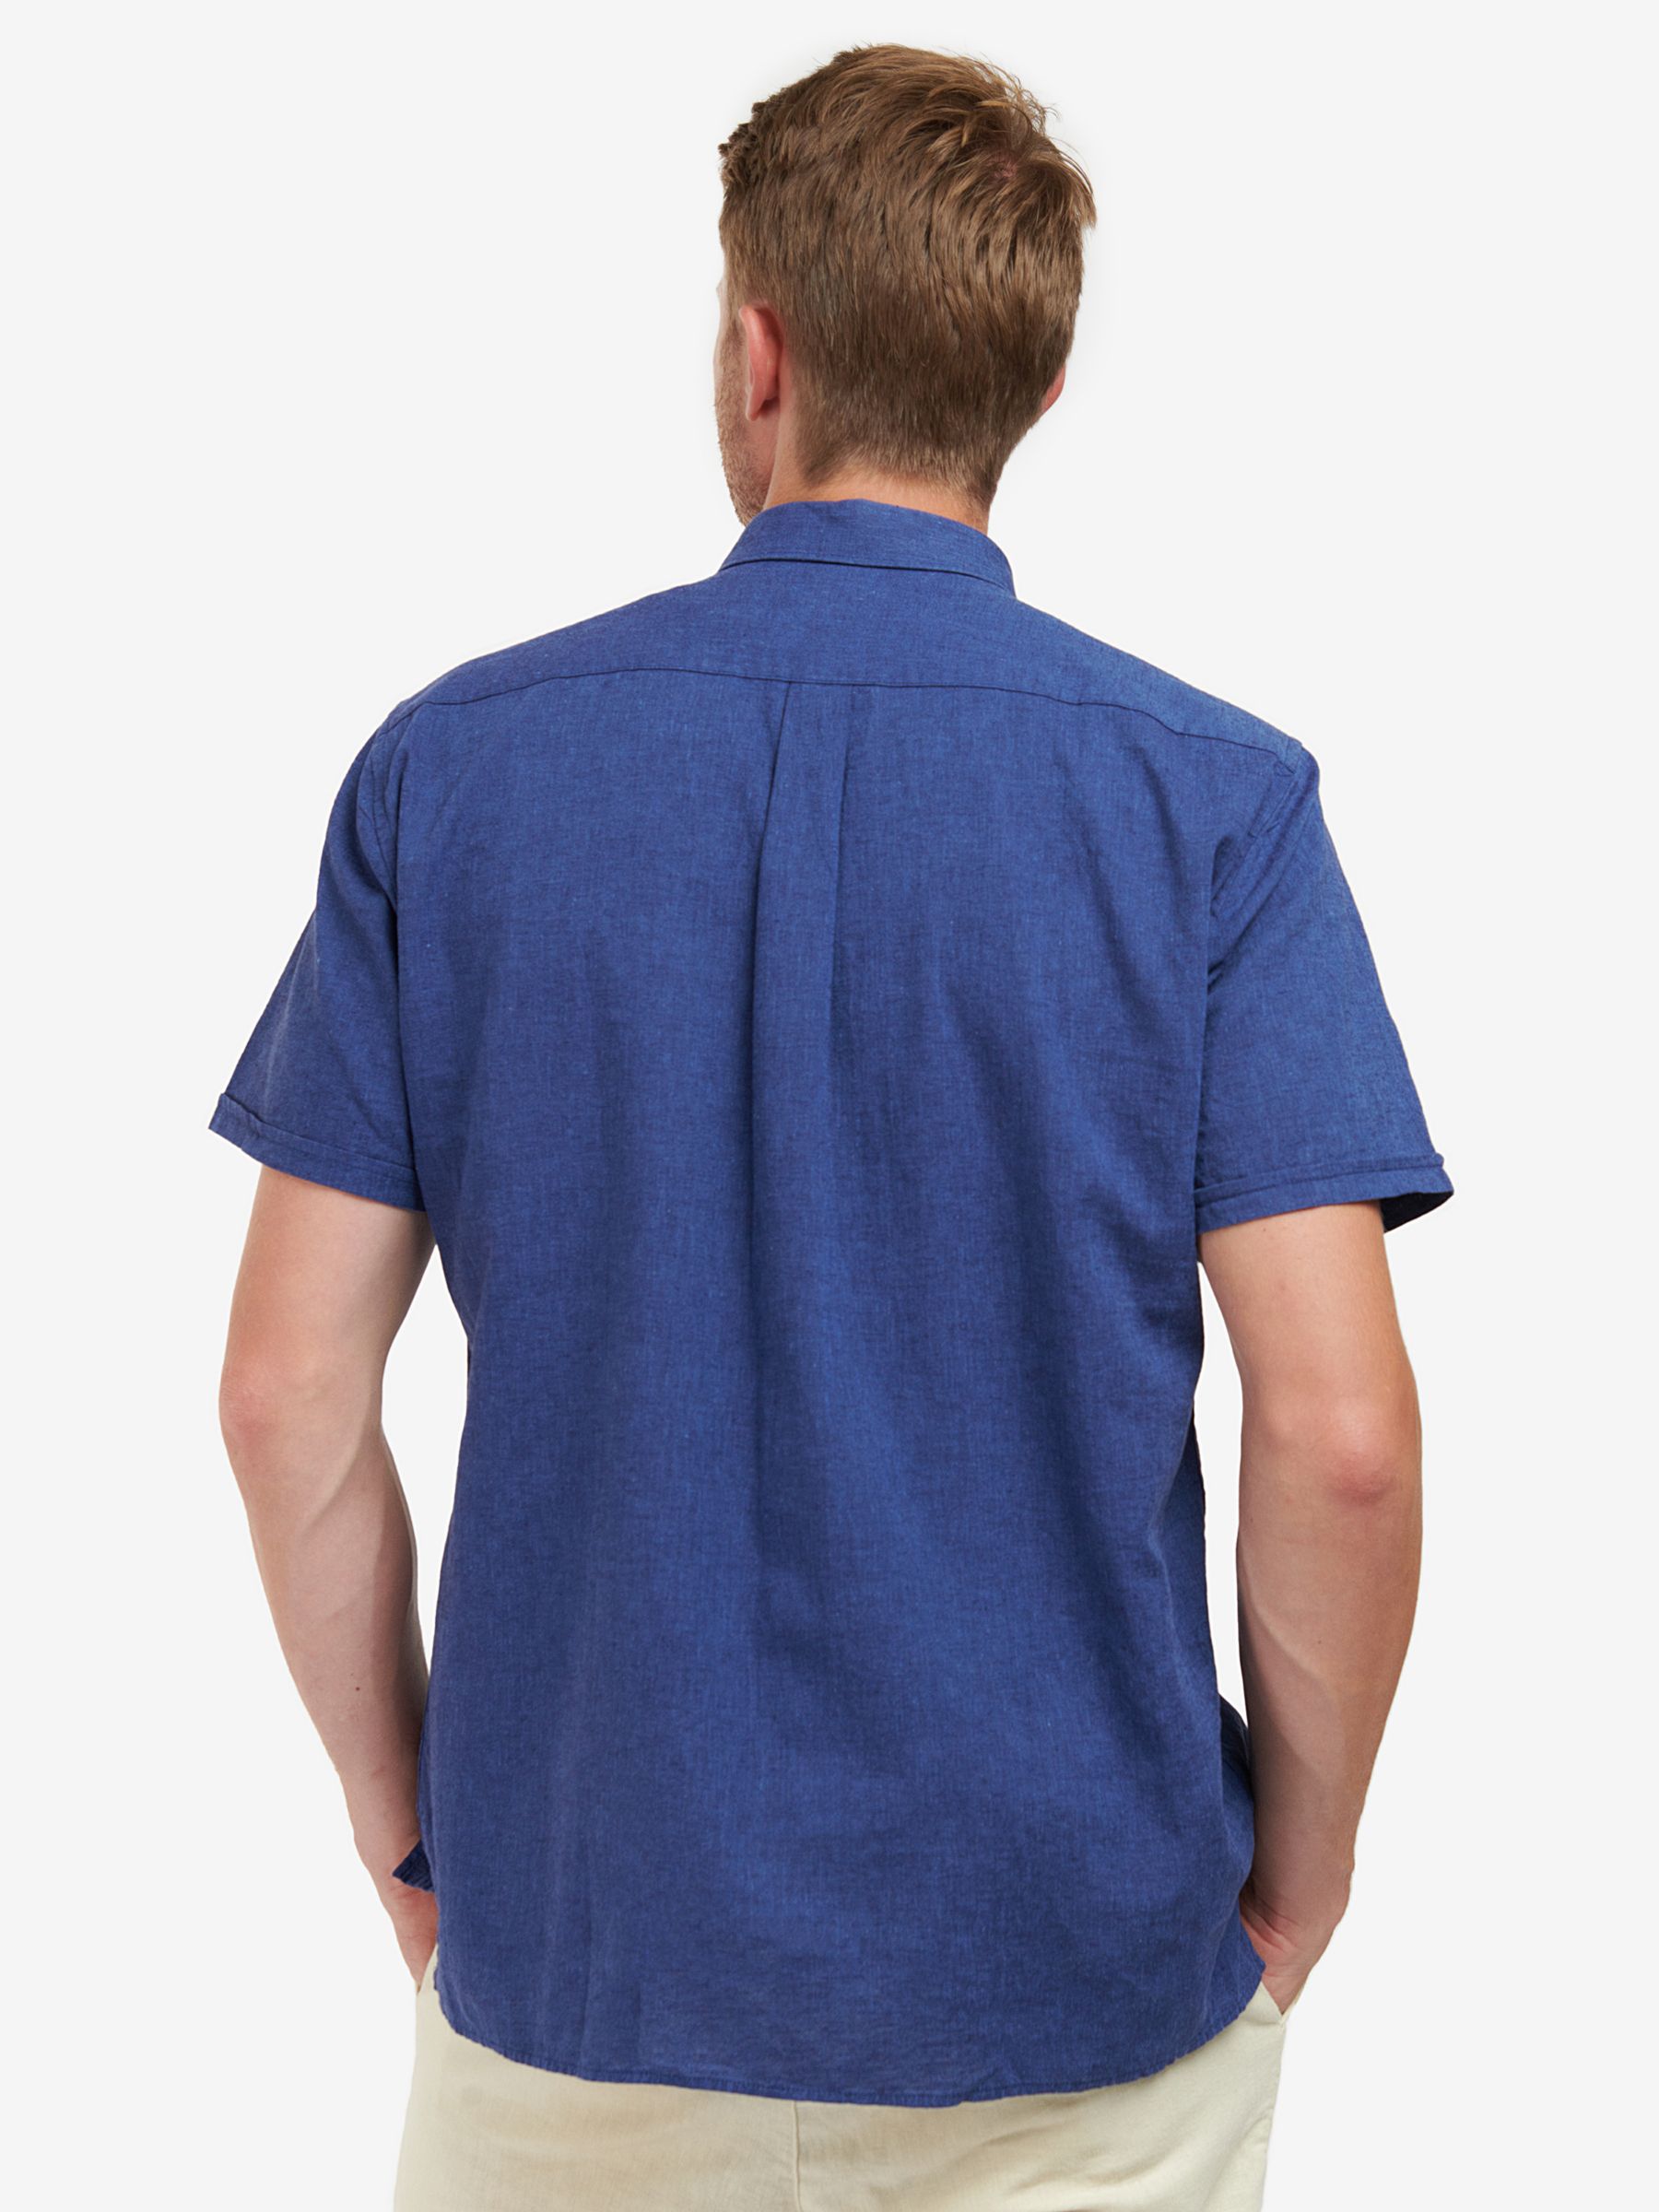 Buy Barbour Nelson Linen Blend Short Sleeve Shirt, Indigo Online at johnlewis.com